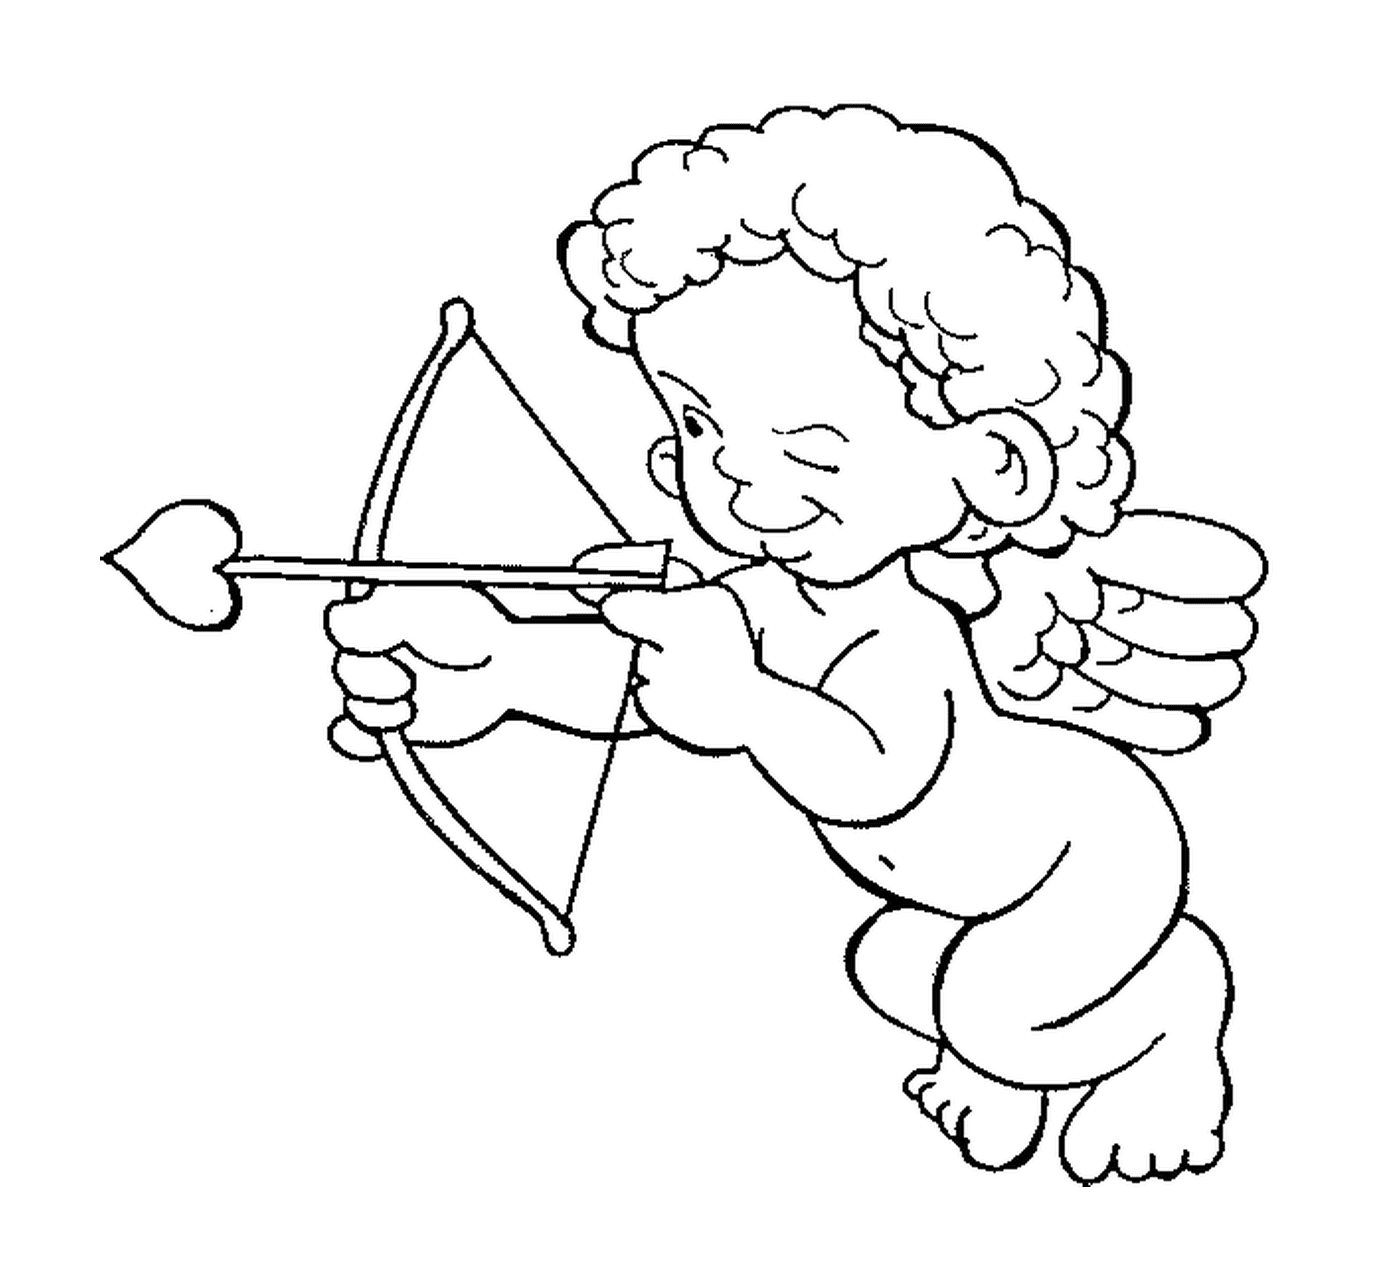  Cupid pulling an arrow 